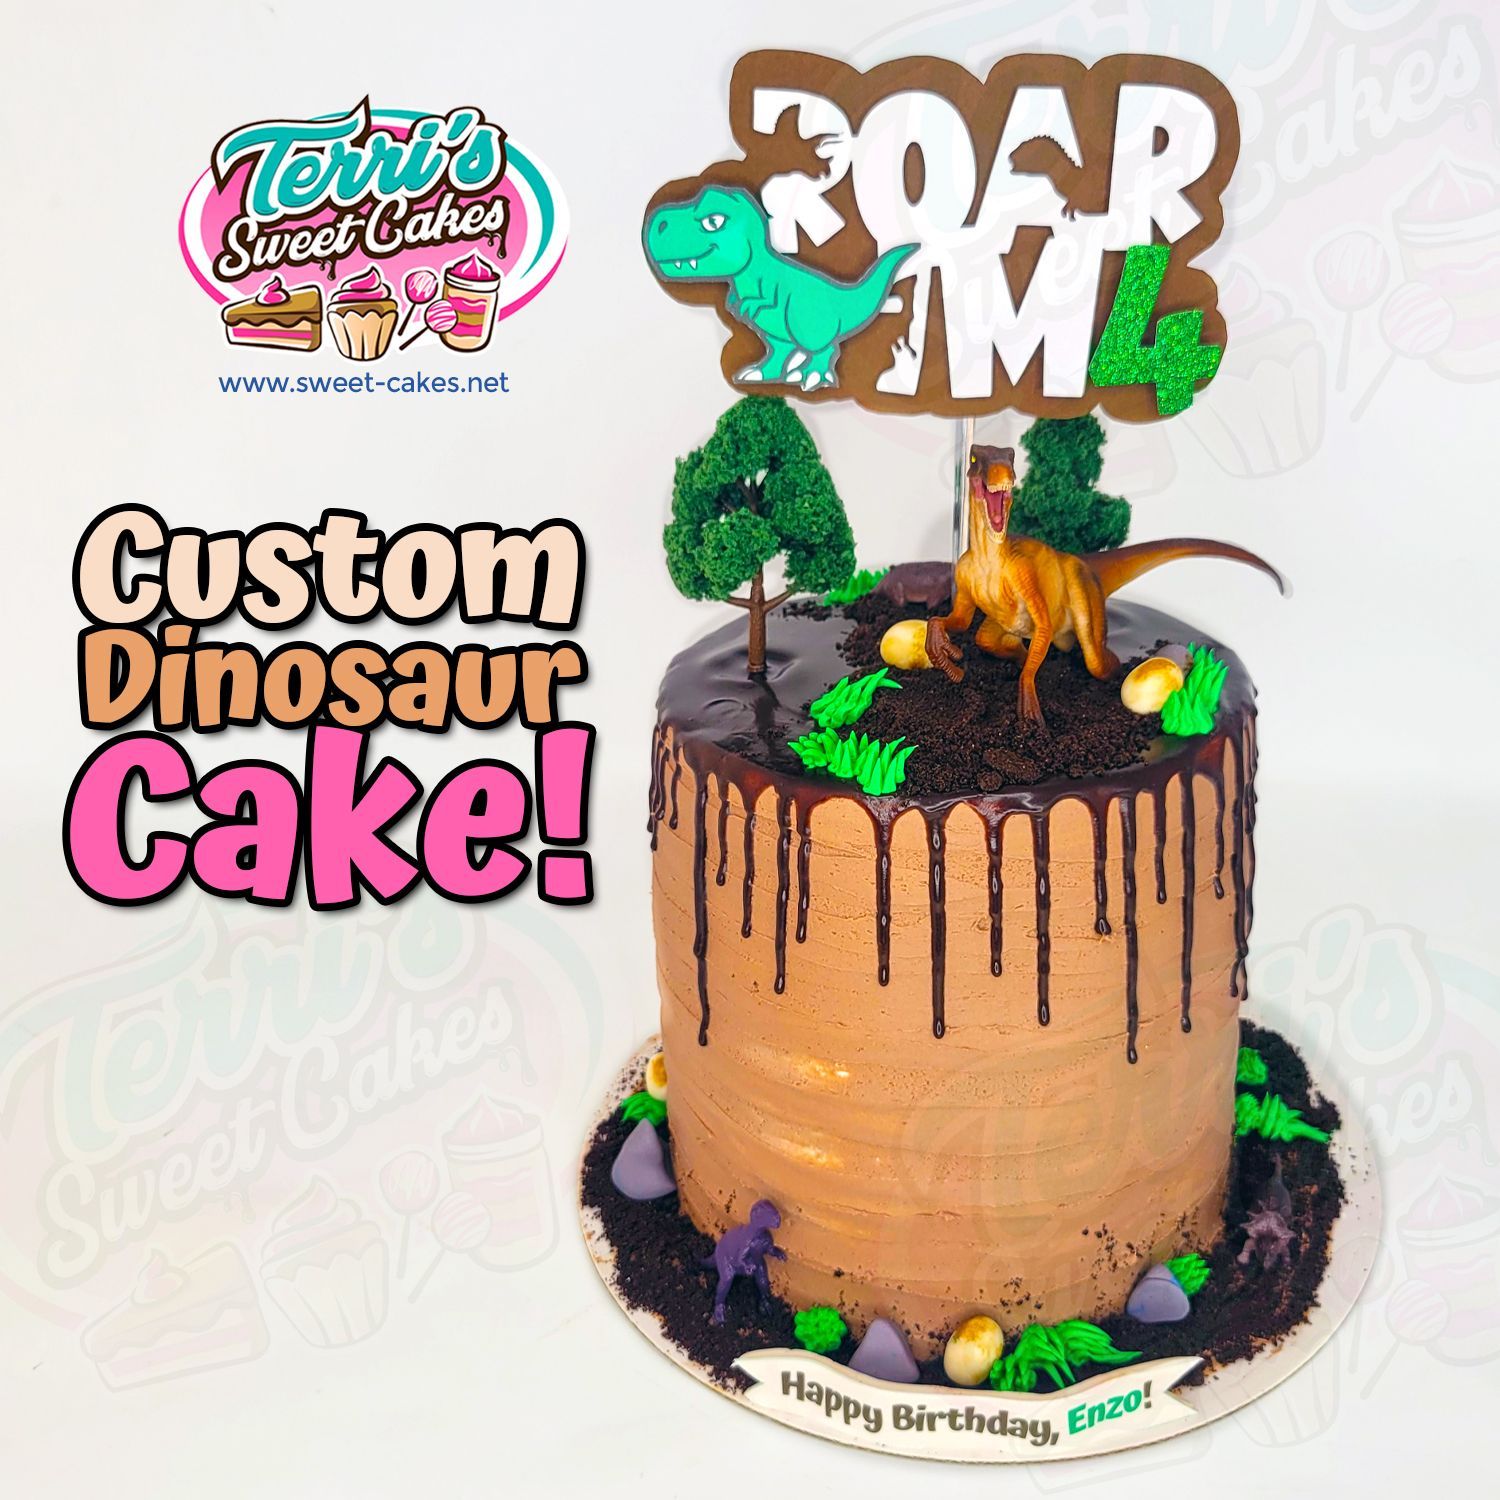 Dinosaur Birthday Cake by Terri's Sweet Cakes